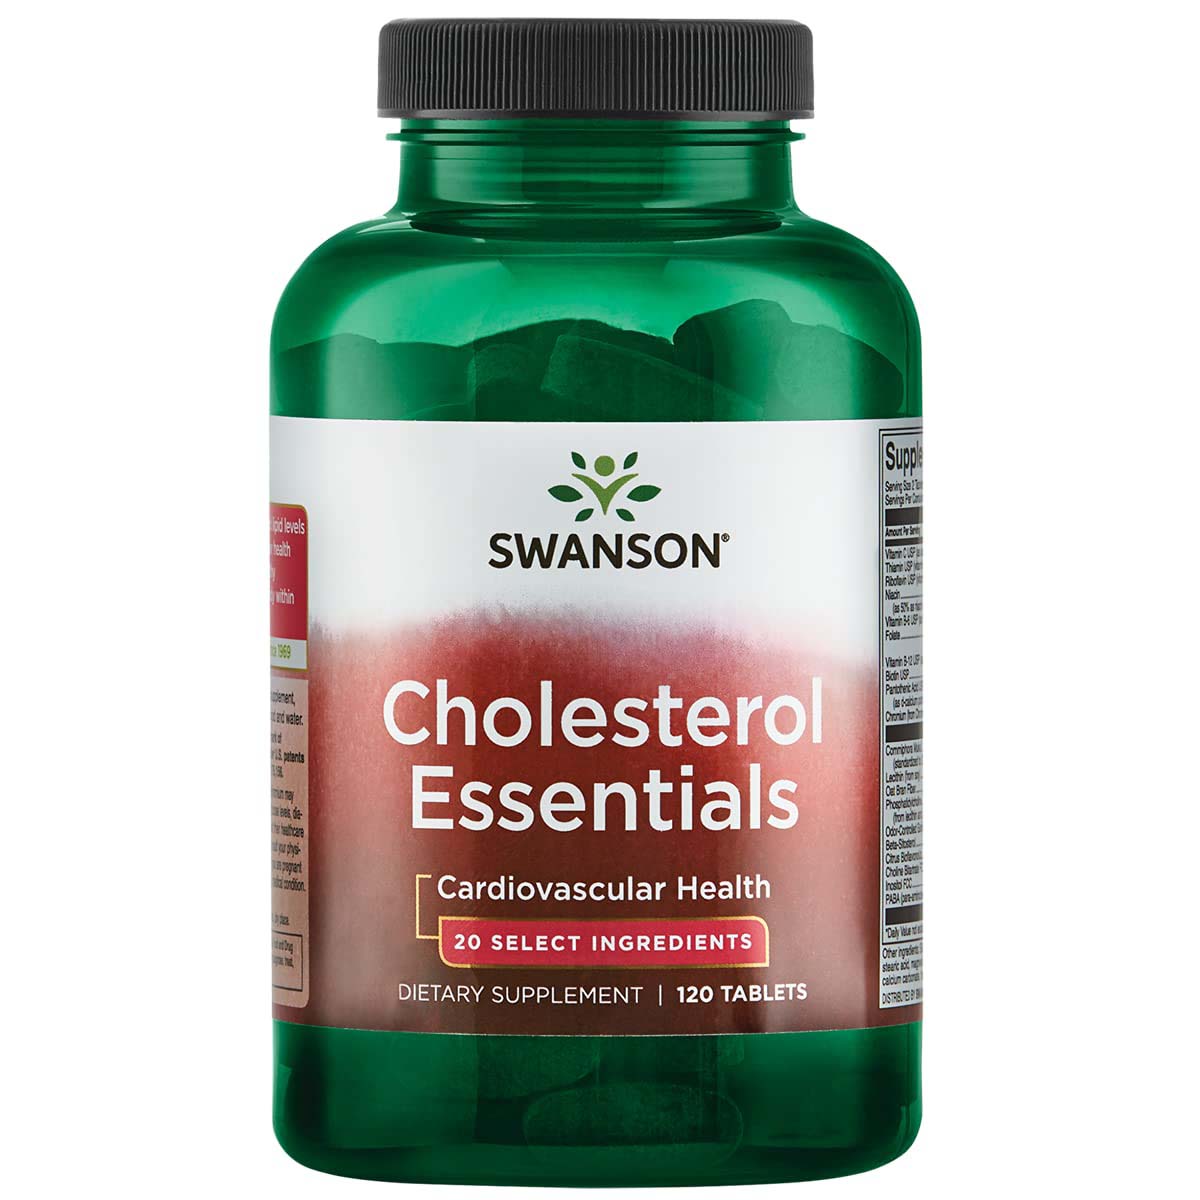 Swanson Cholesterol Essentials, 120 Tablets